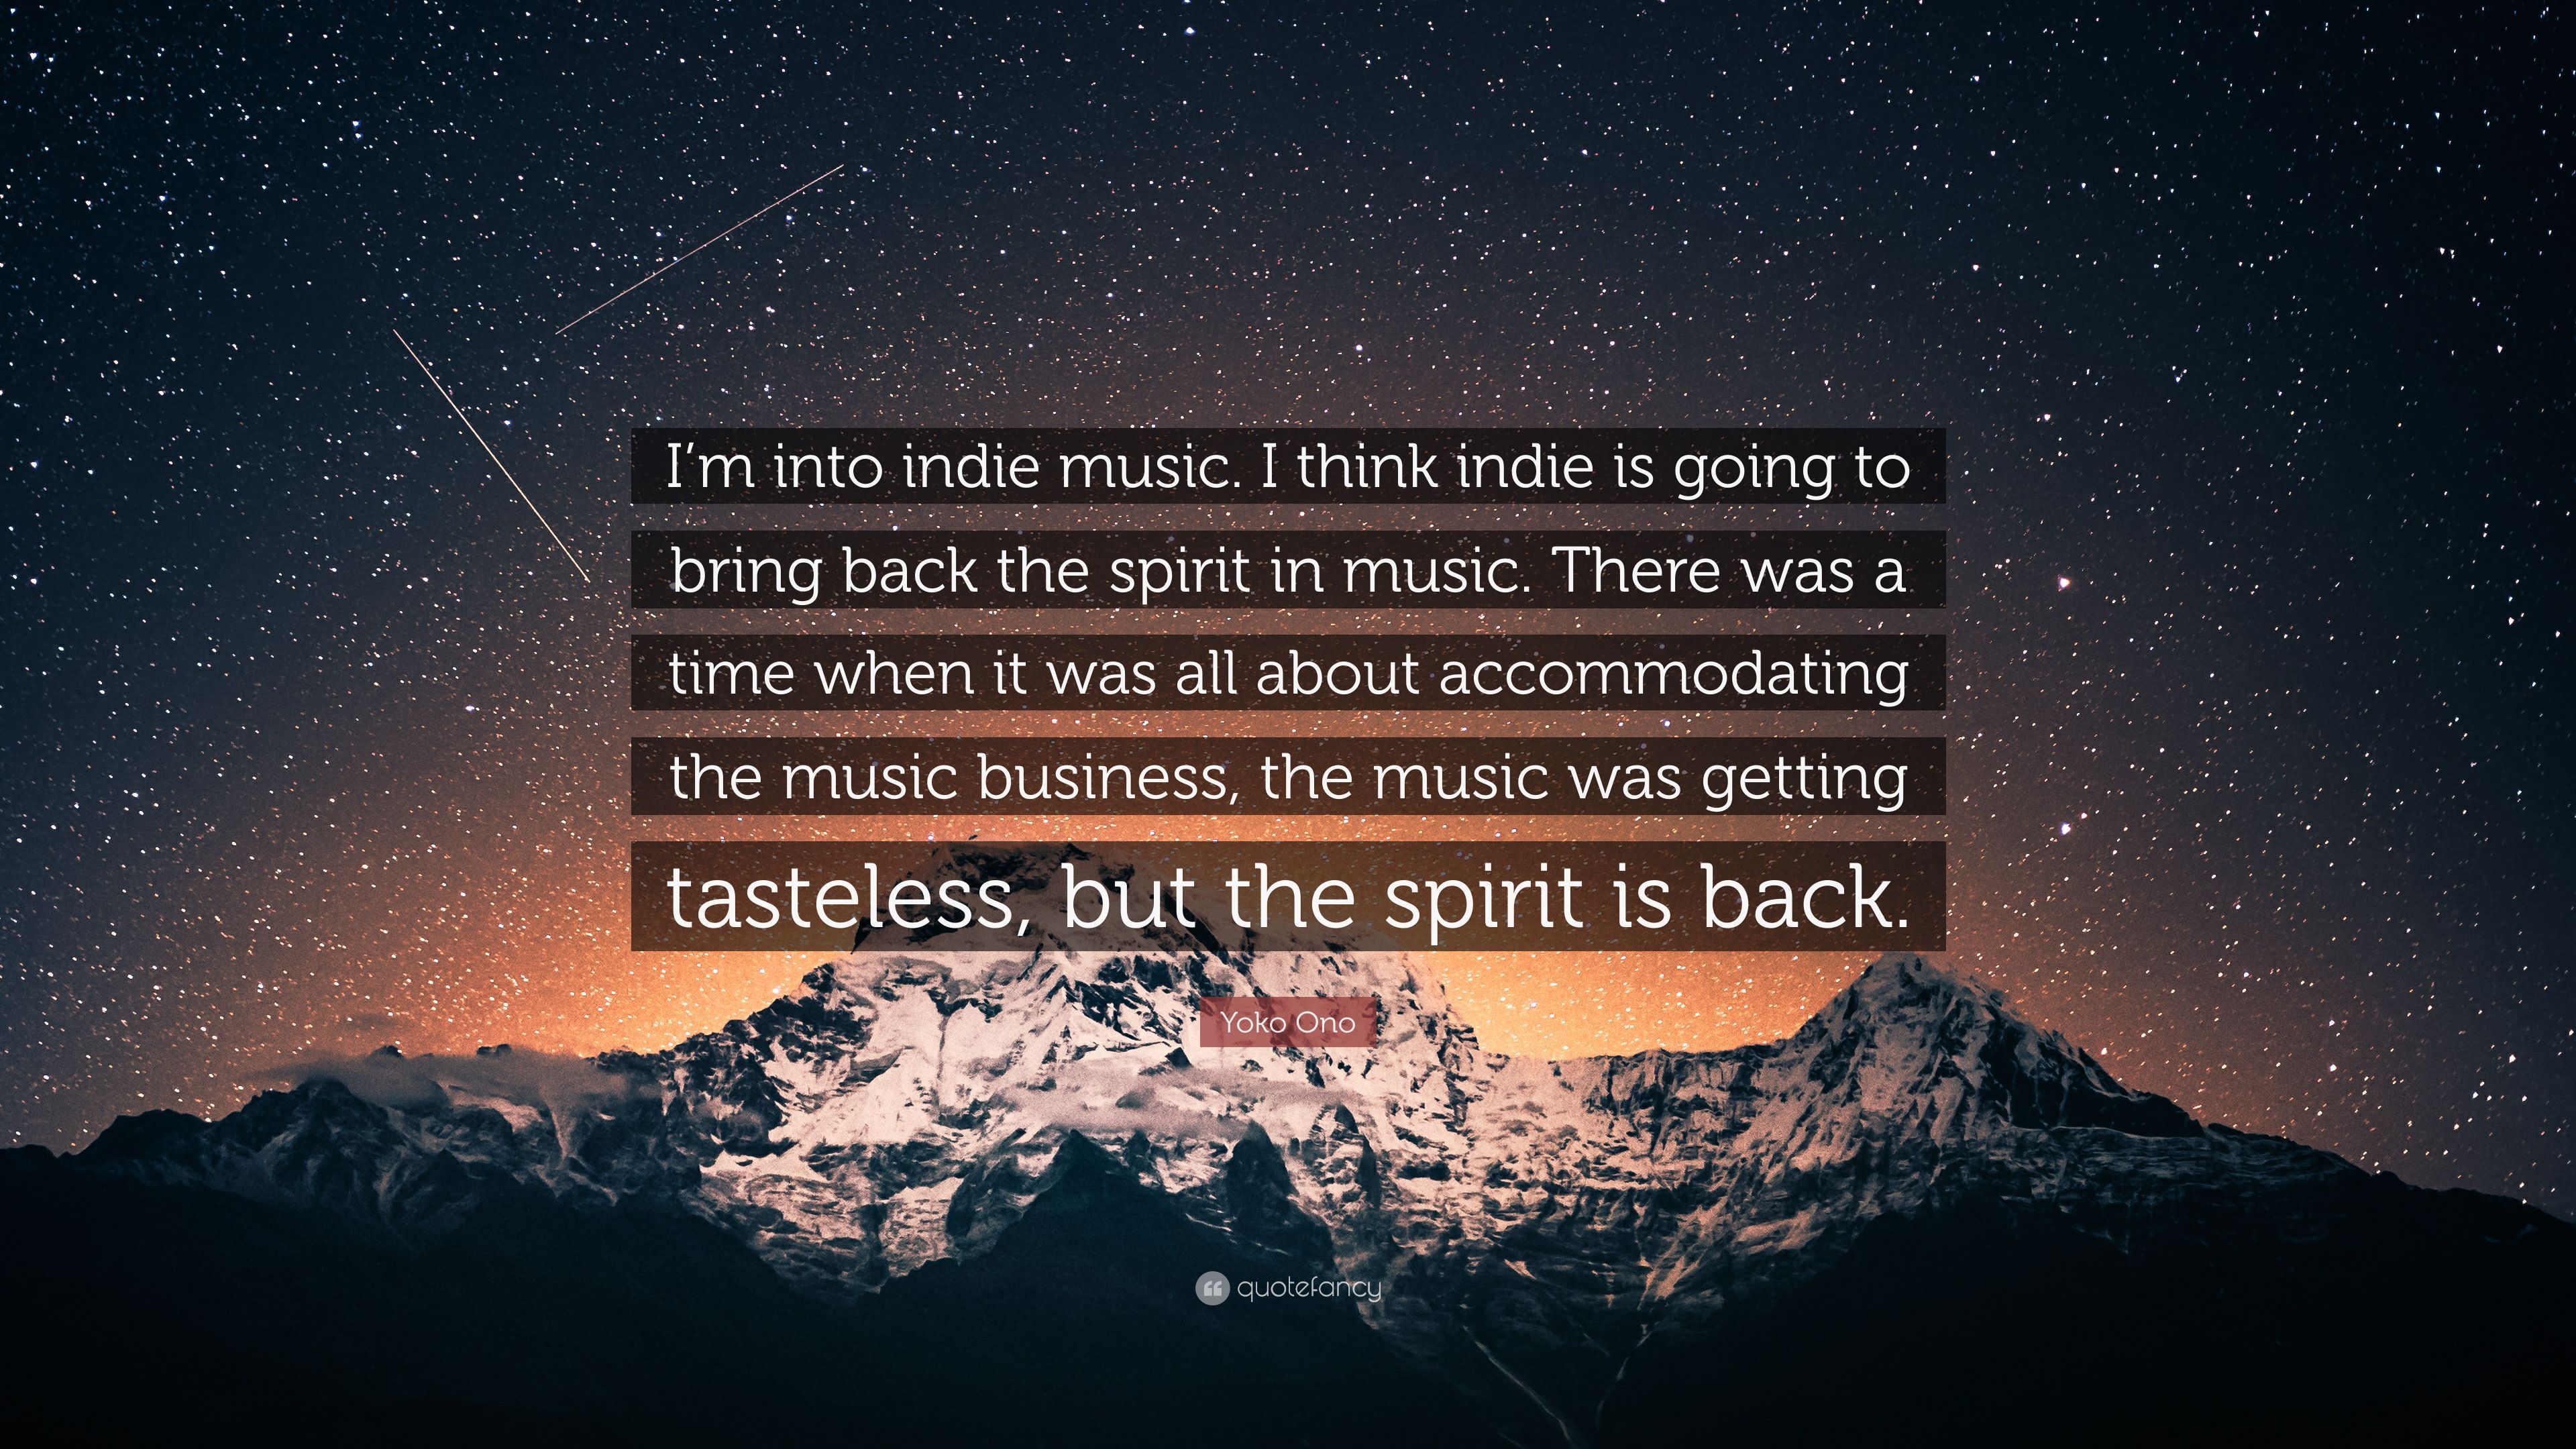 Yoko Ono Quote: “I'm into indie music .quotefancy.com